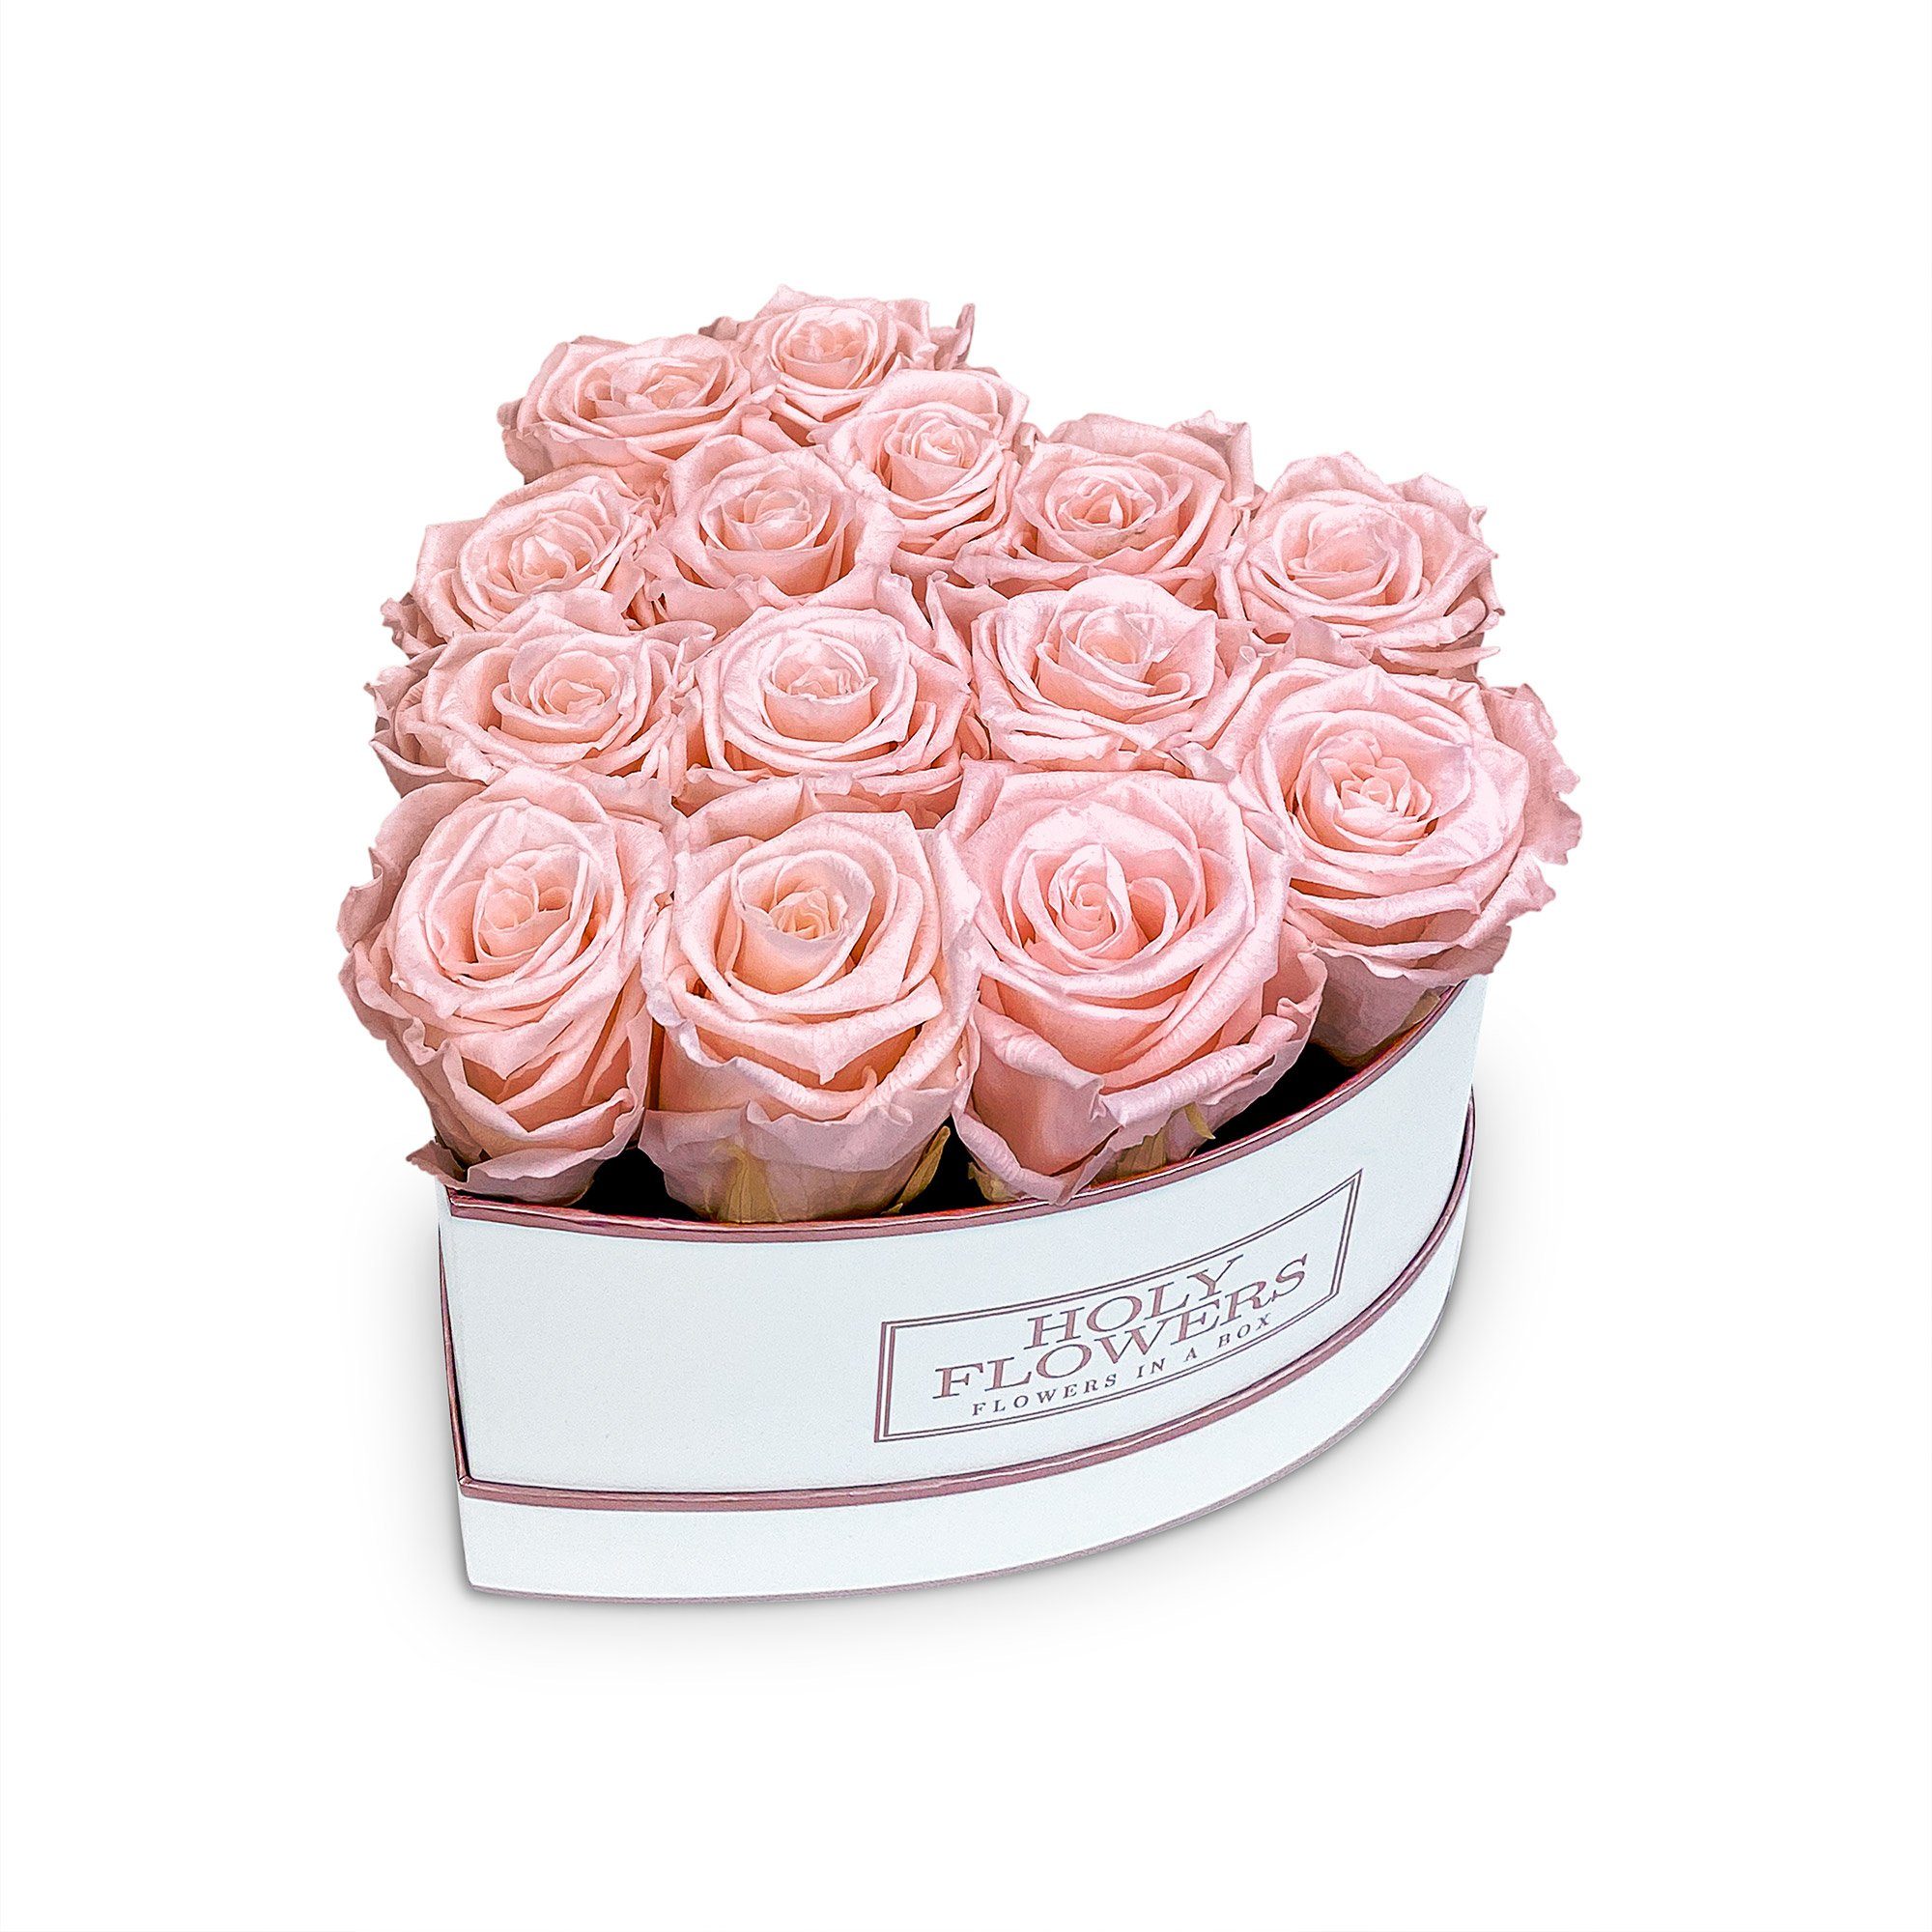 Kunstblume Rosenbox Großes Rosé Herz mit langlebigen Rosen I 3 Jahre haltbar I Echte, duftende konservierte Blumen Infinity Rose, Holy Flowers, Höhe 10 cm Pink Blush